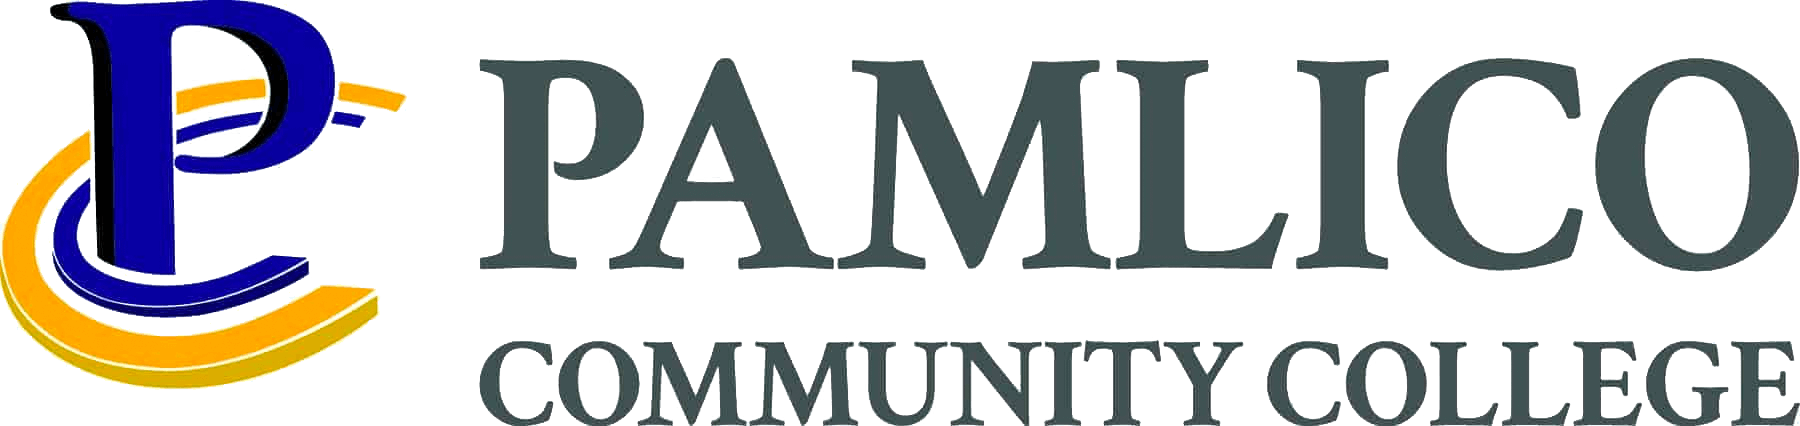 Pamlico Community College logo.